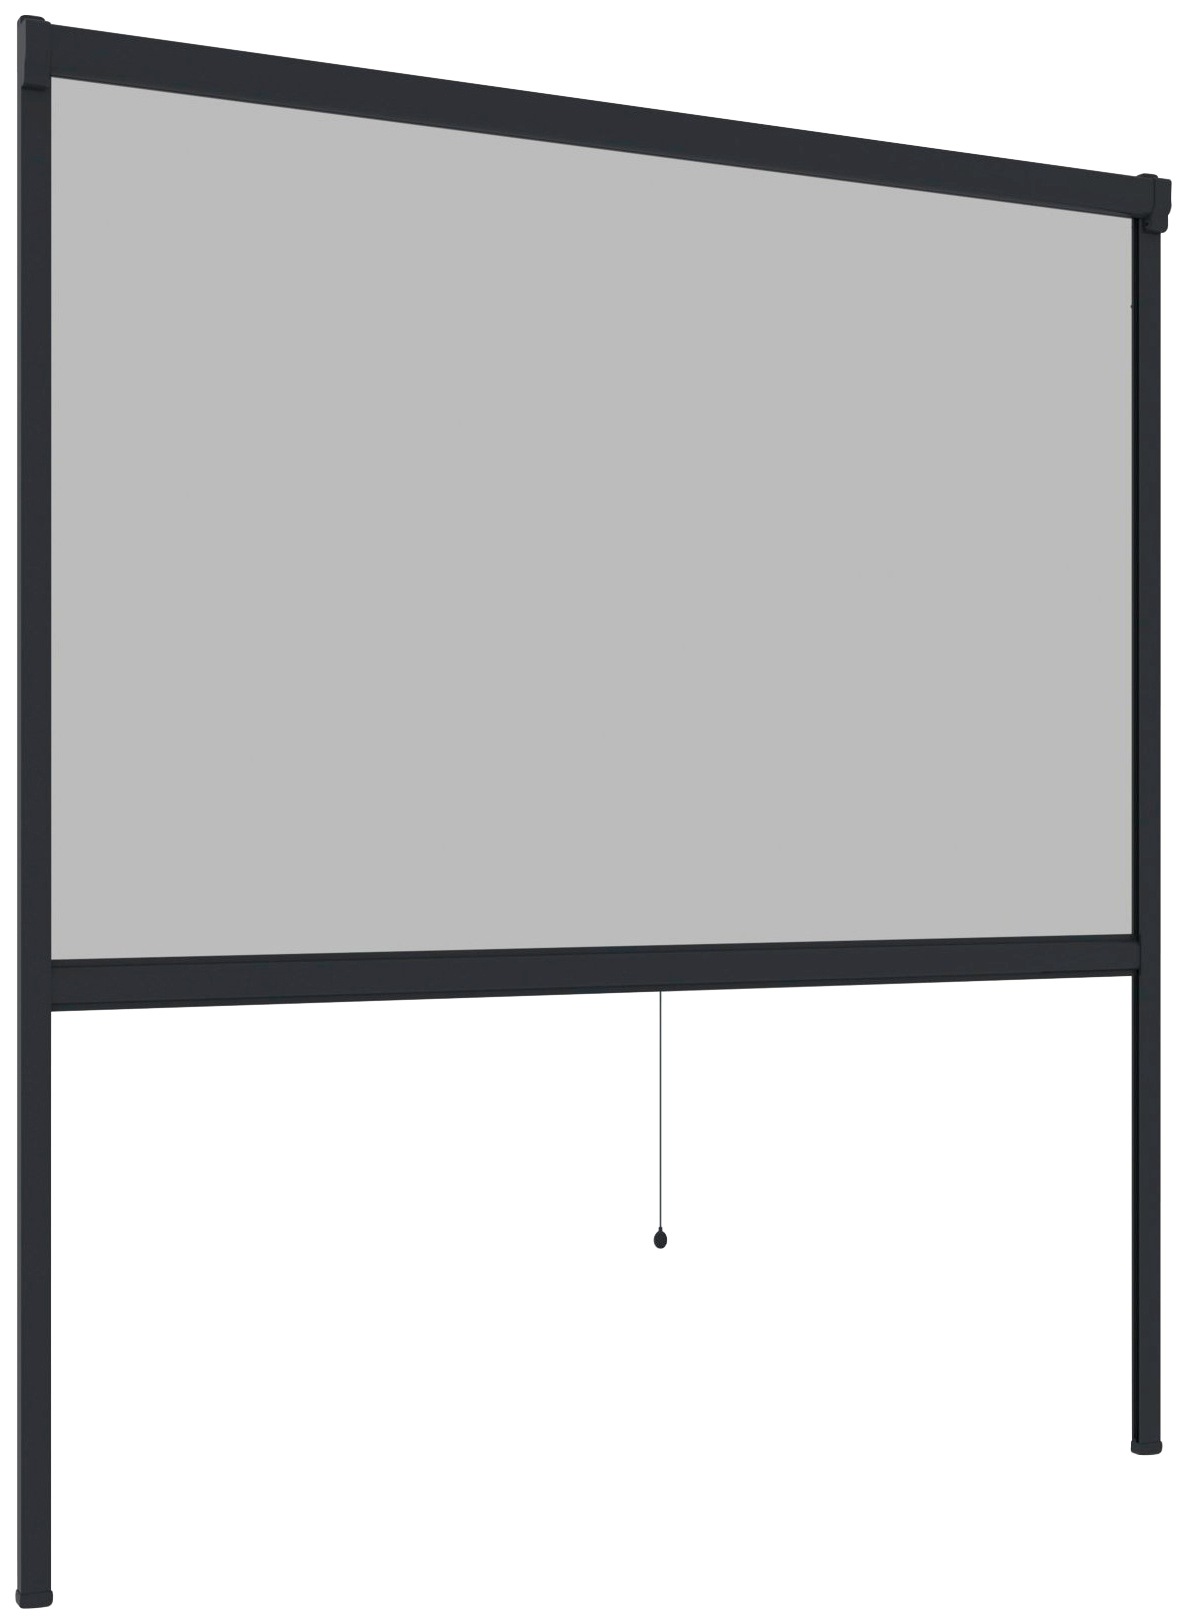 Windhager Insektenschutzrollo »PLUS«, transparent, BxH: 160x160 cm